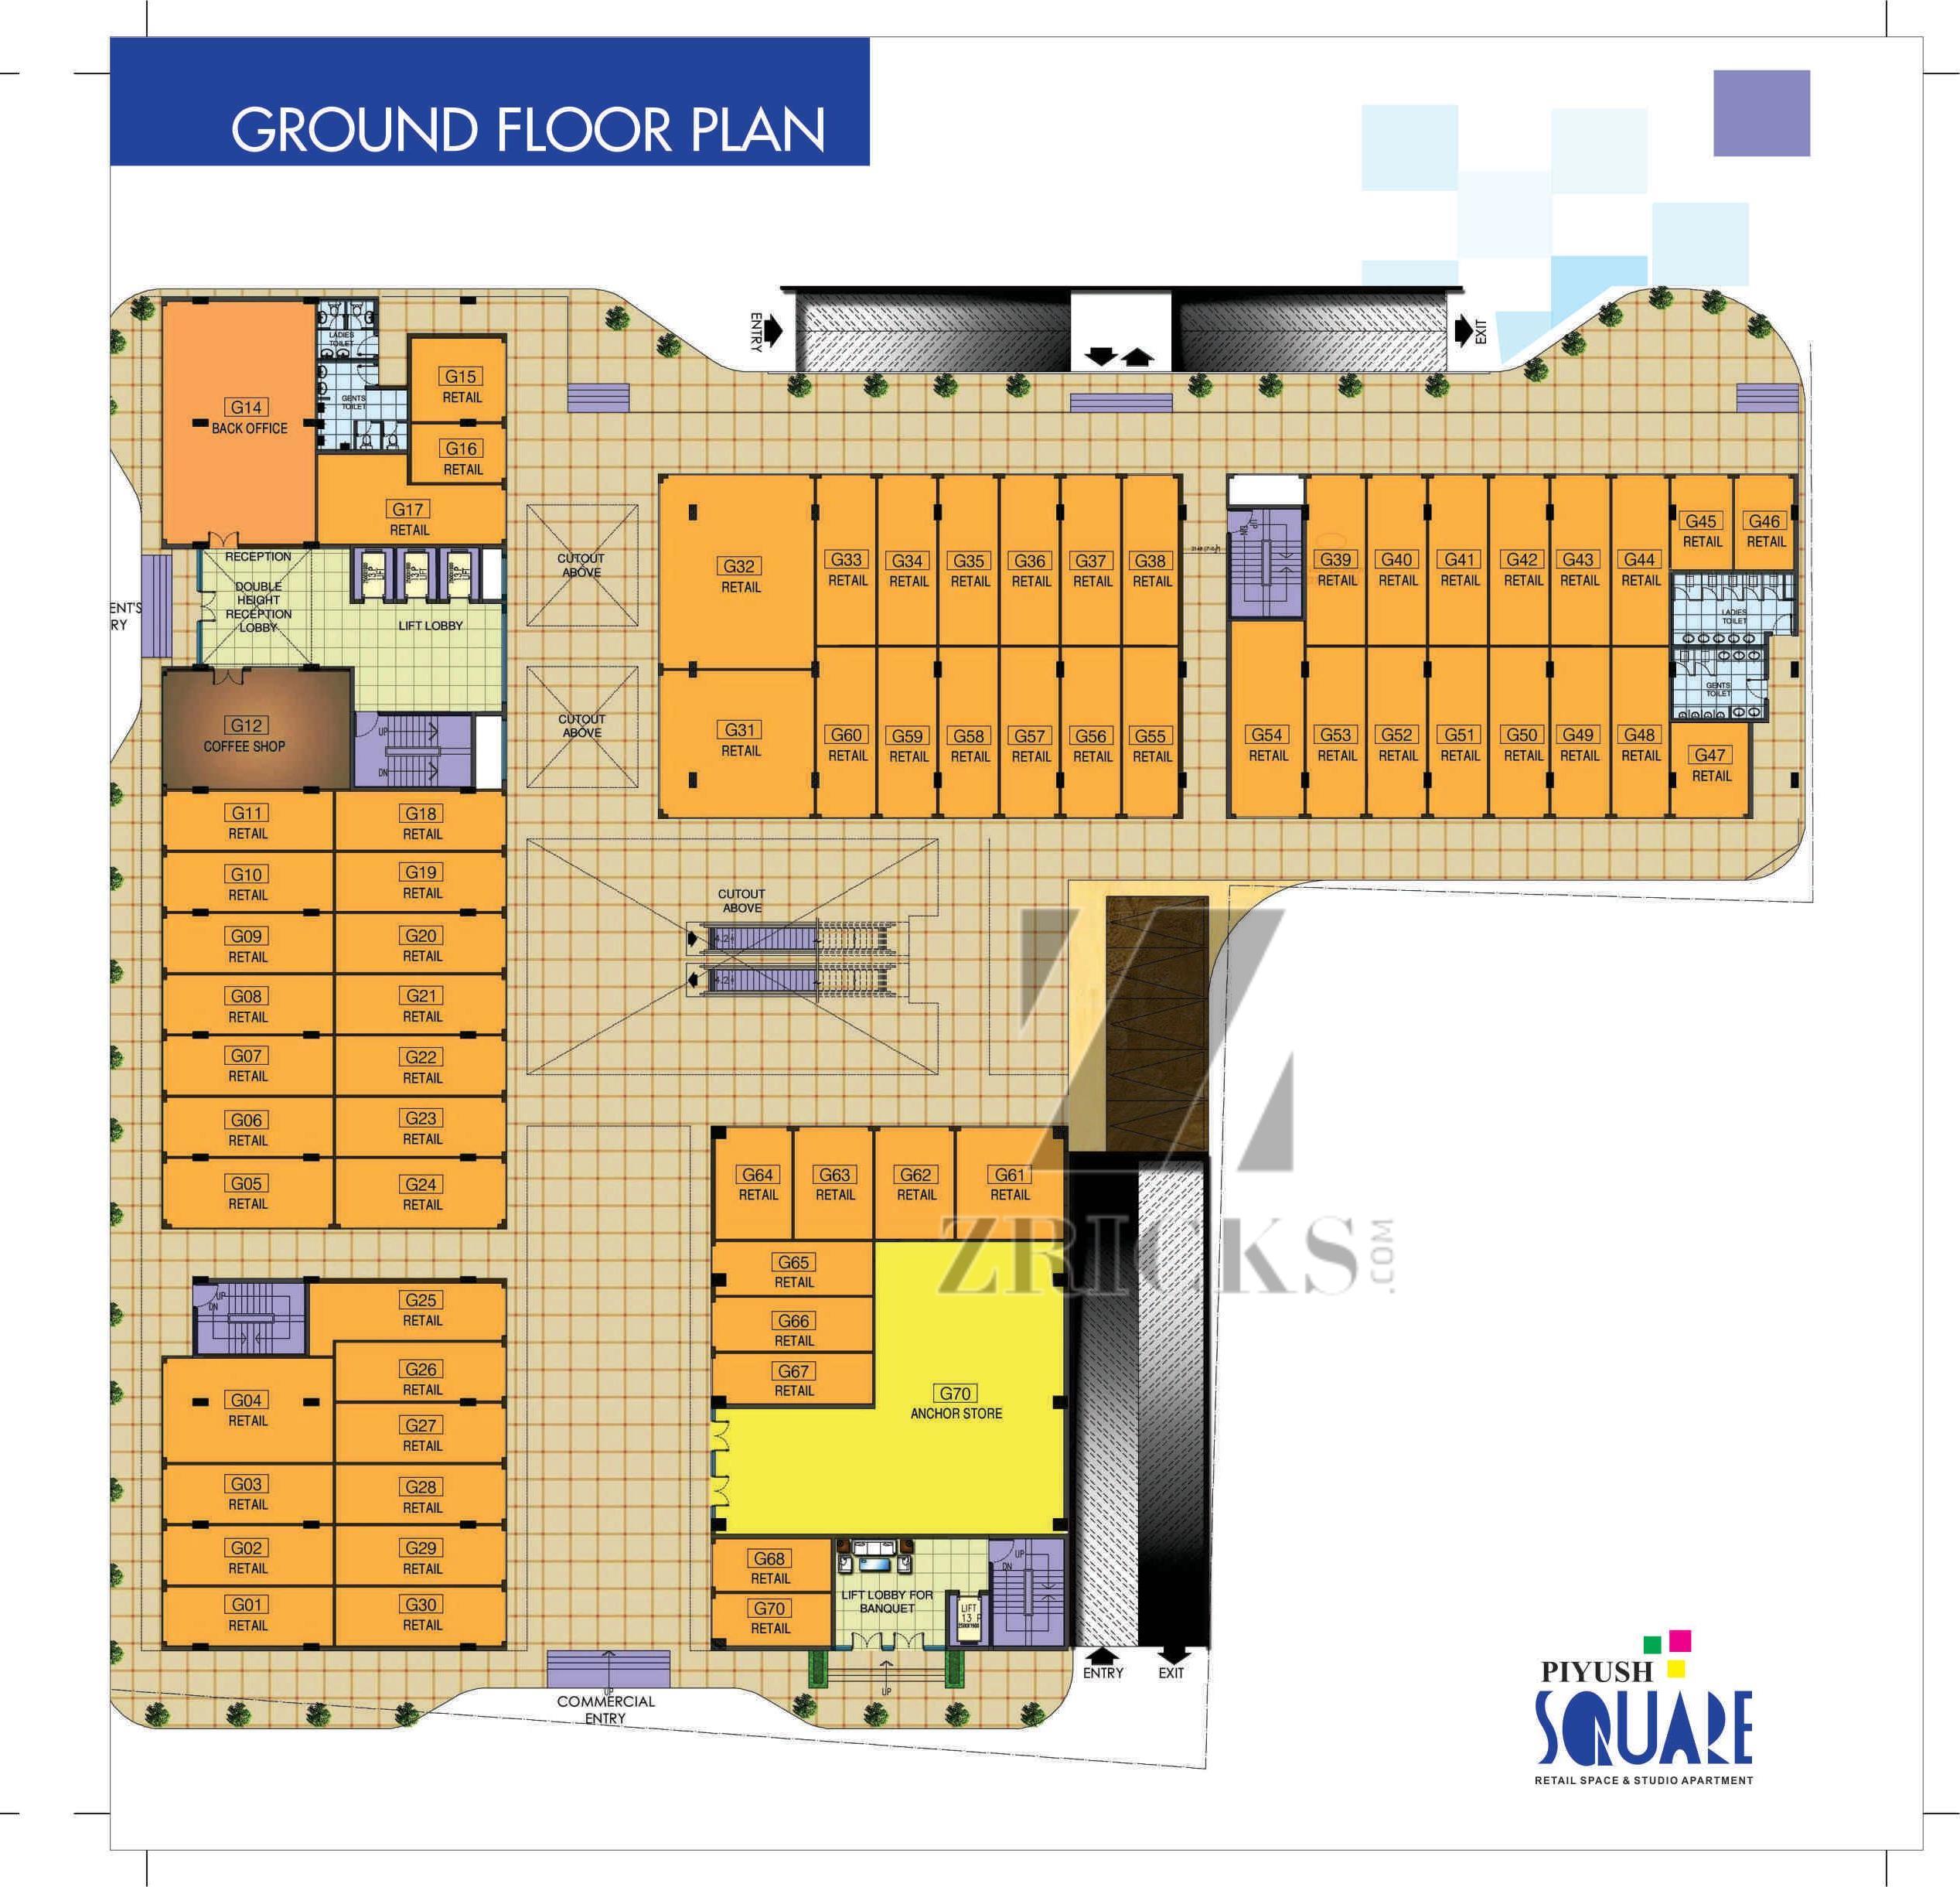 Piyush Square Floor Plan